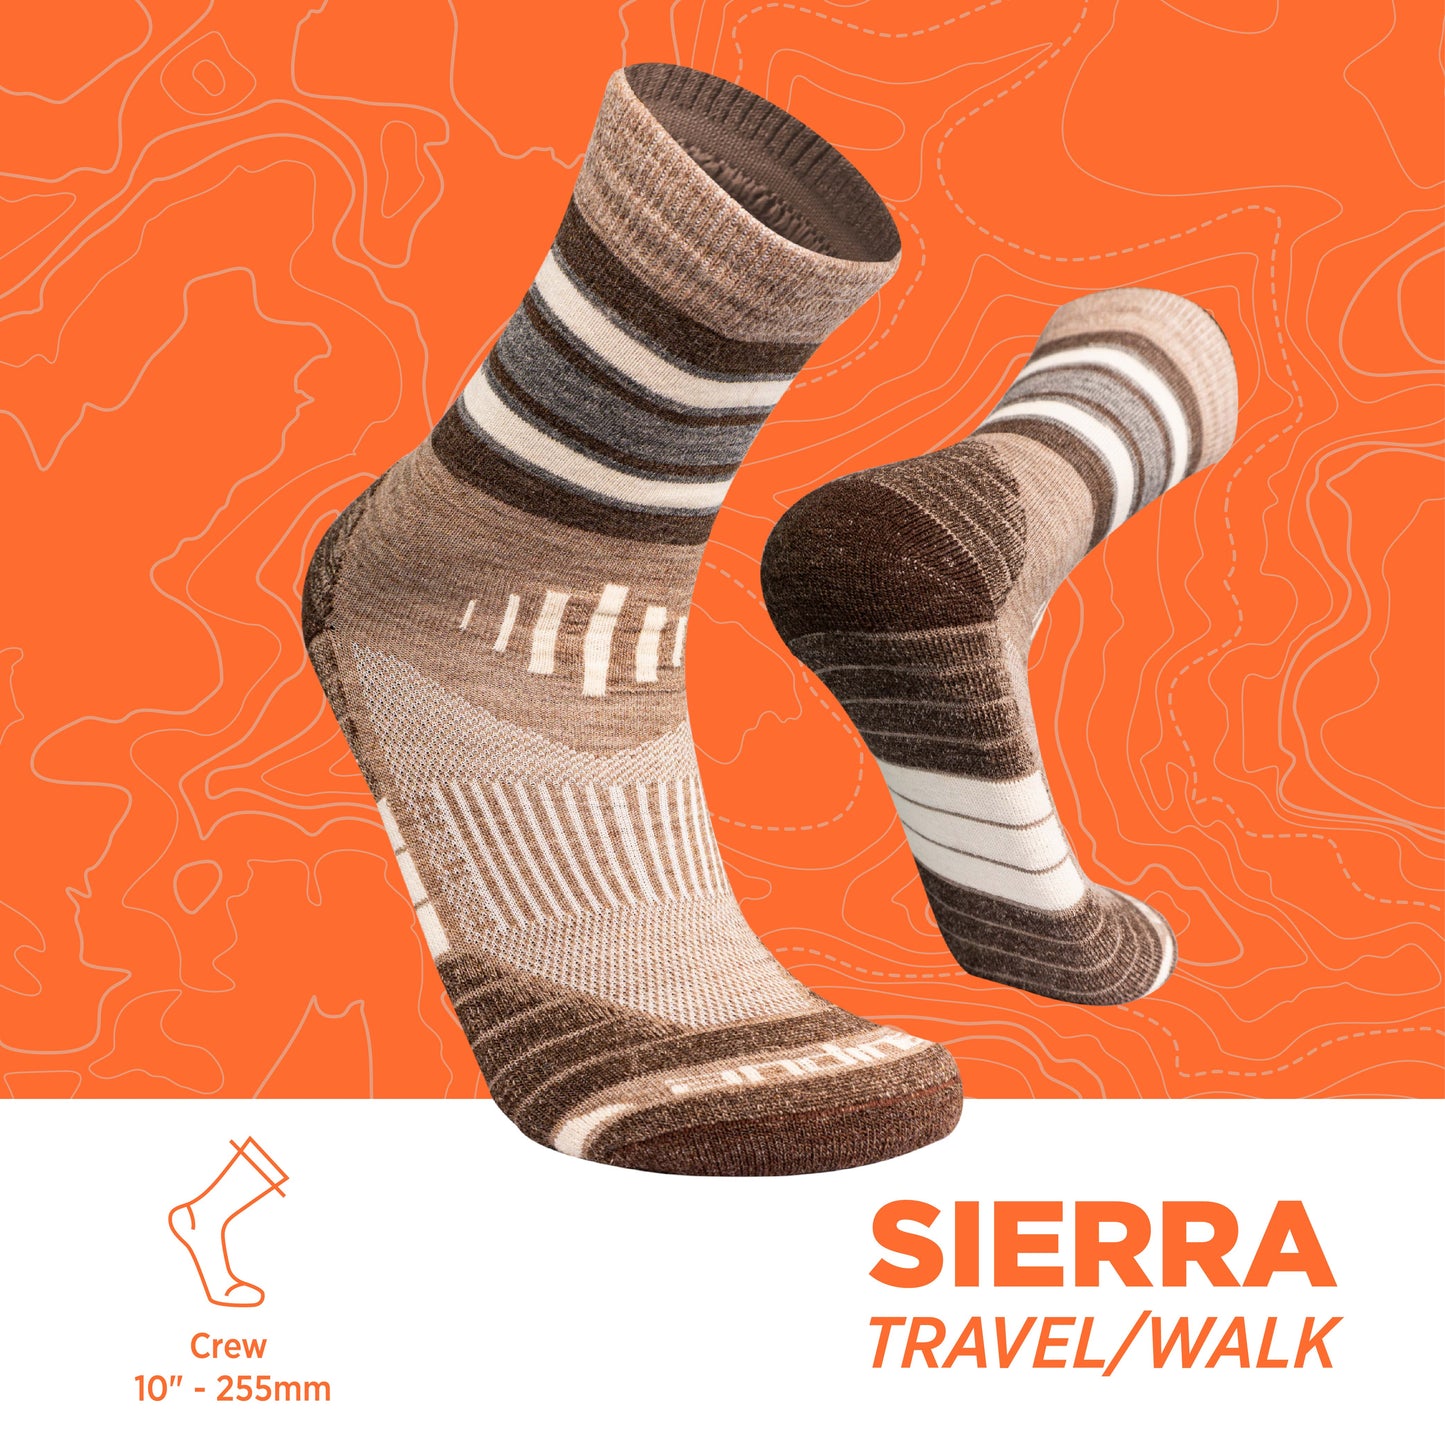 Sierra | Travel & Walk